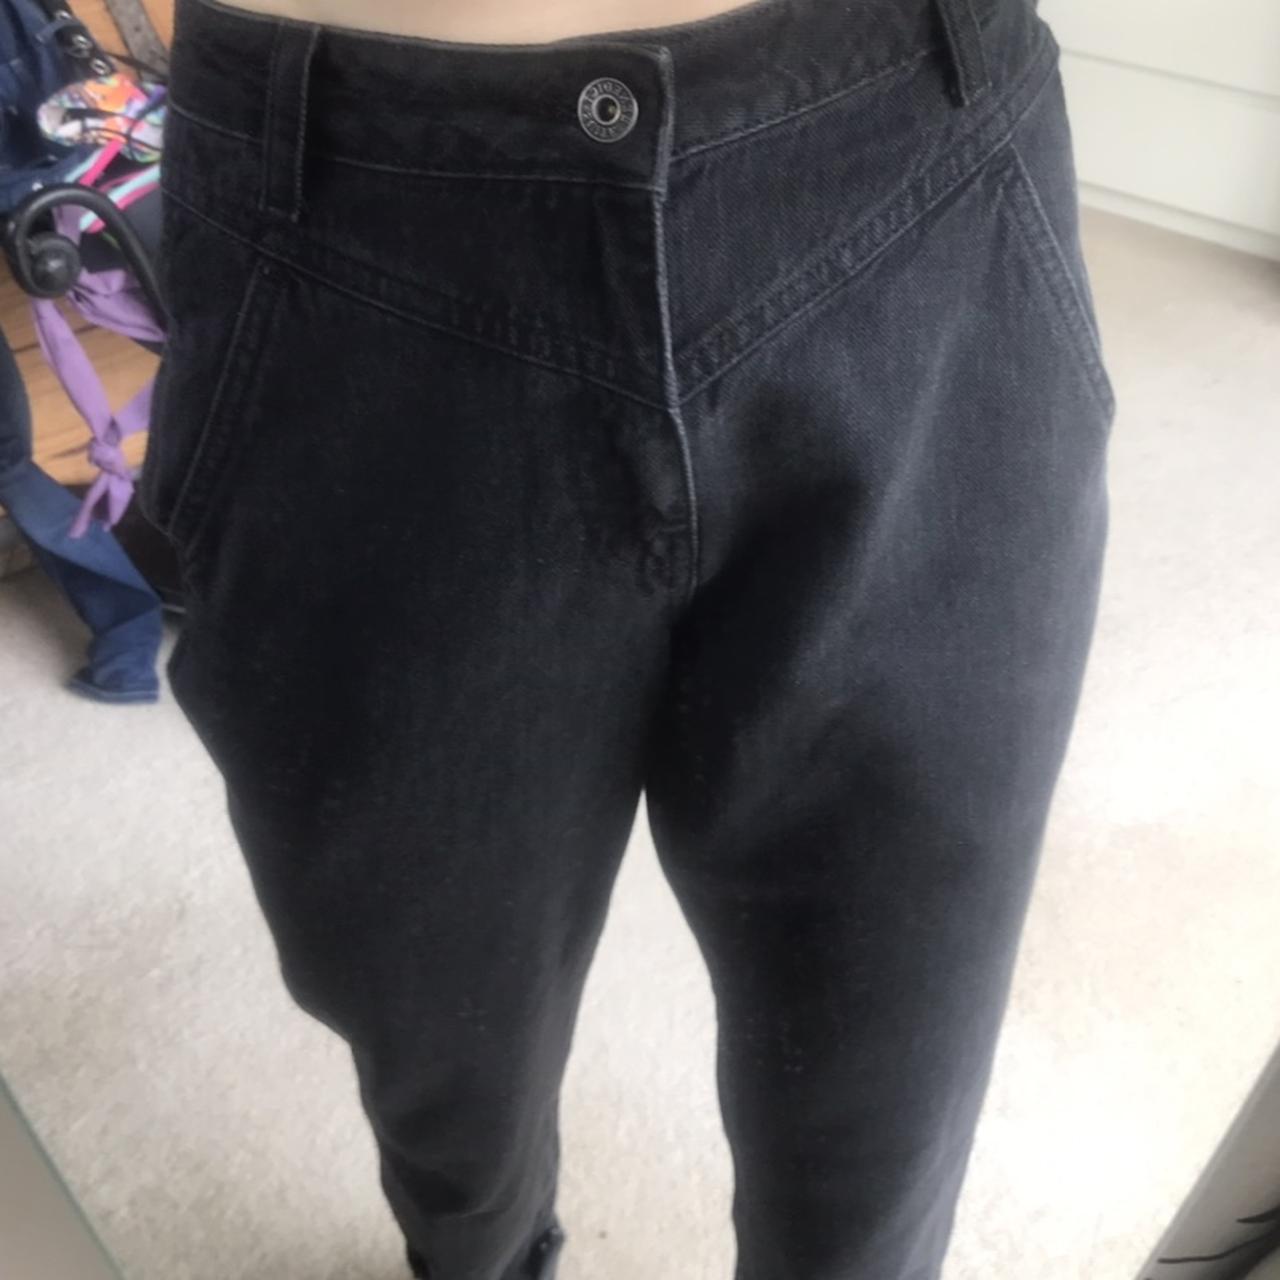 Cute black baggy mum/ boyfriend jeans Hardly worn - Depop